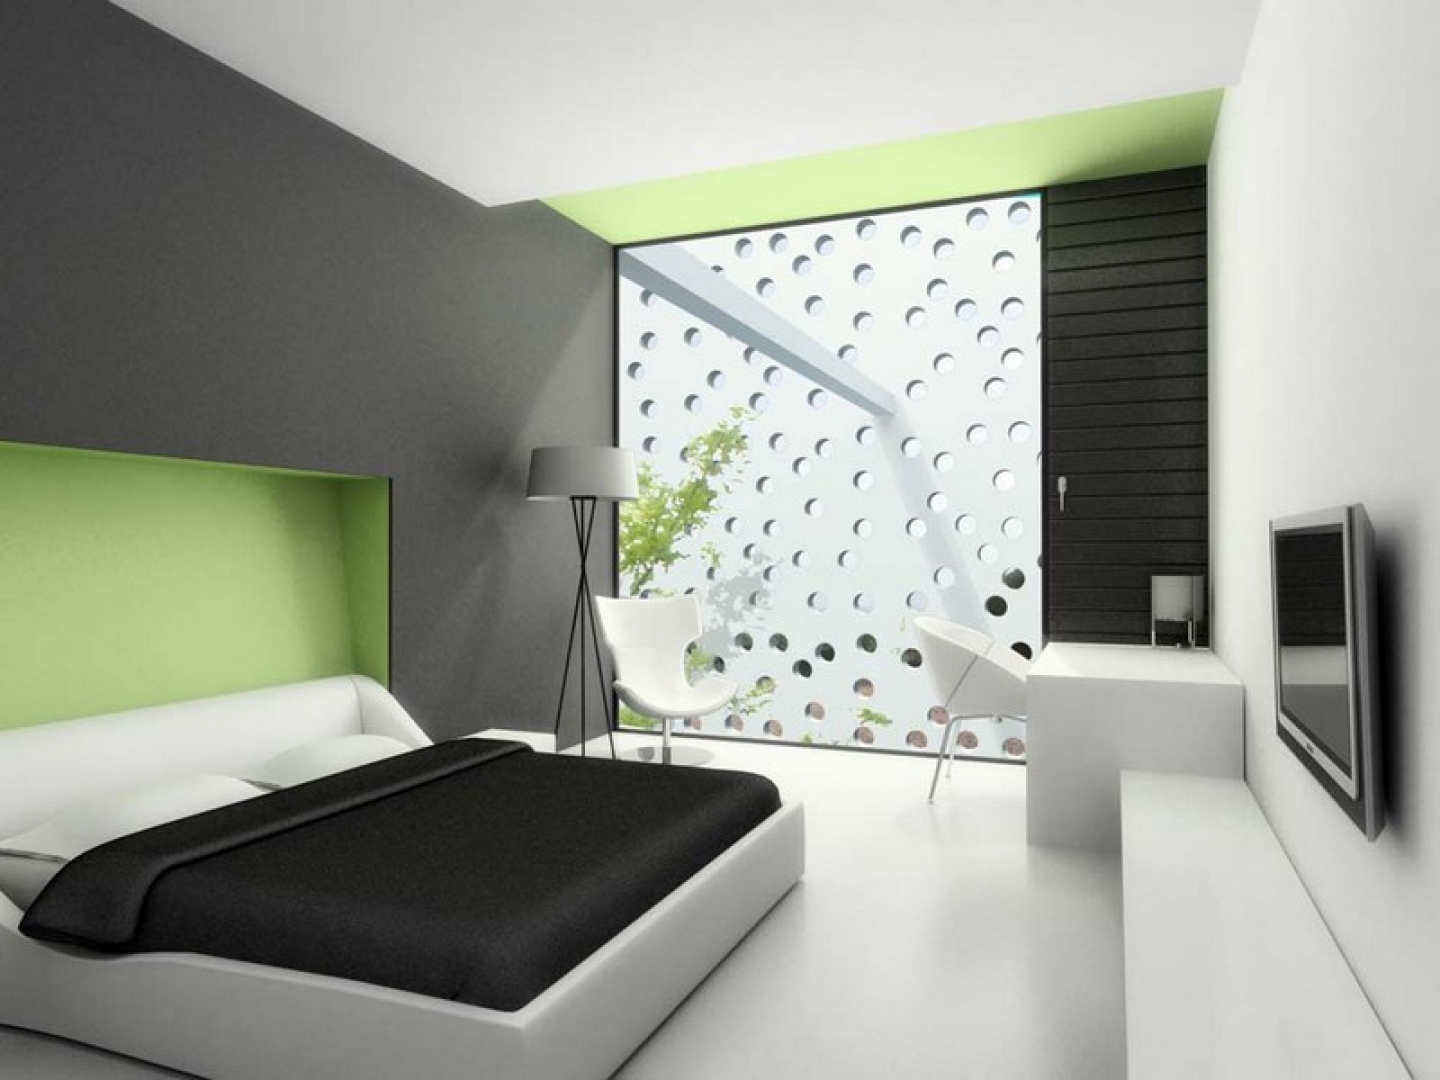 28119 make your own bedroom wallpaper the best interior design